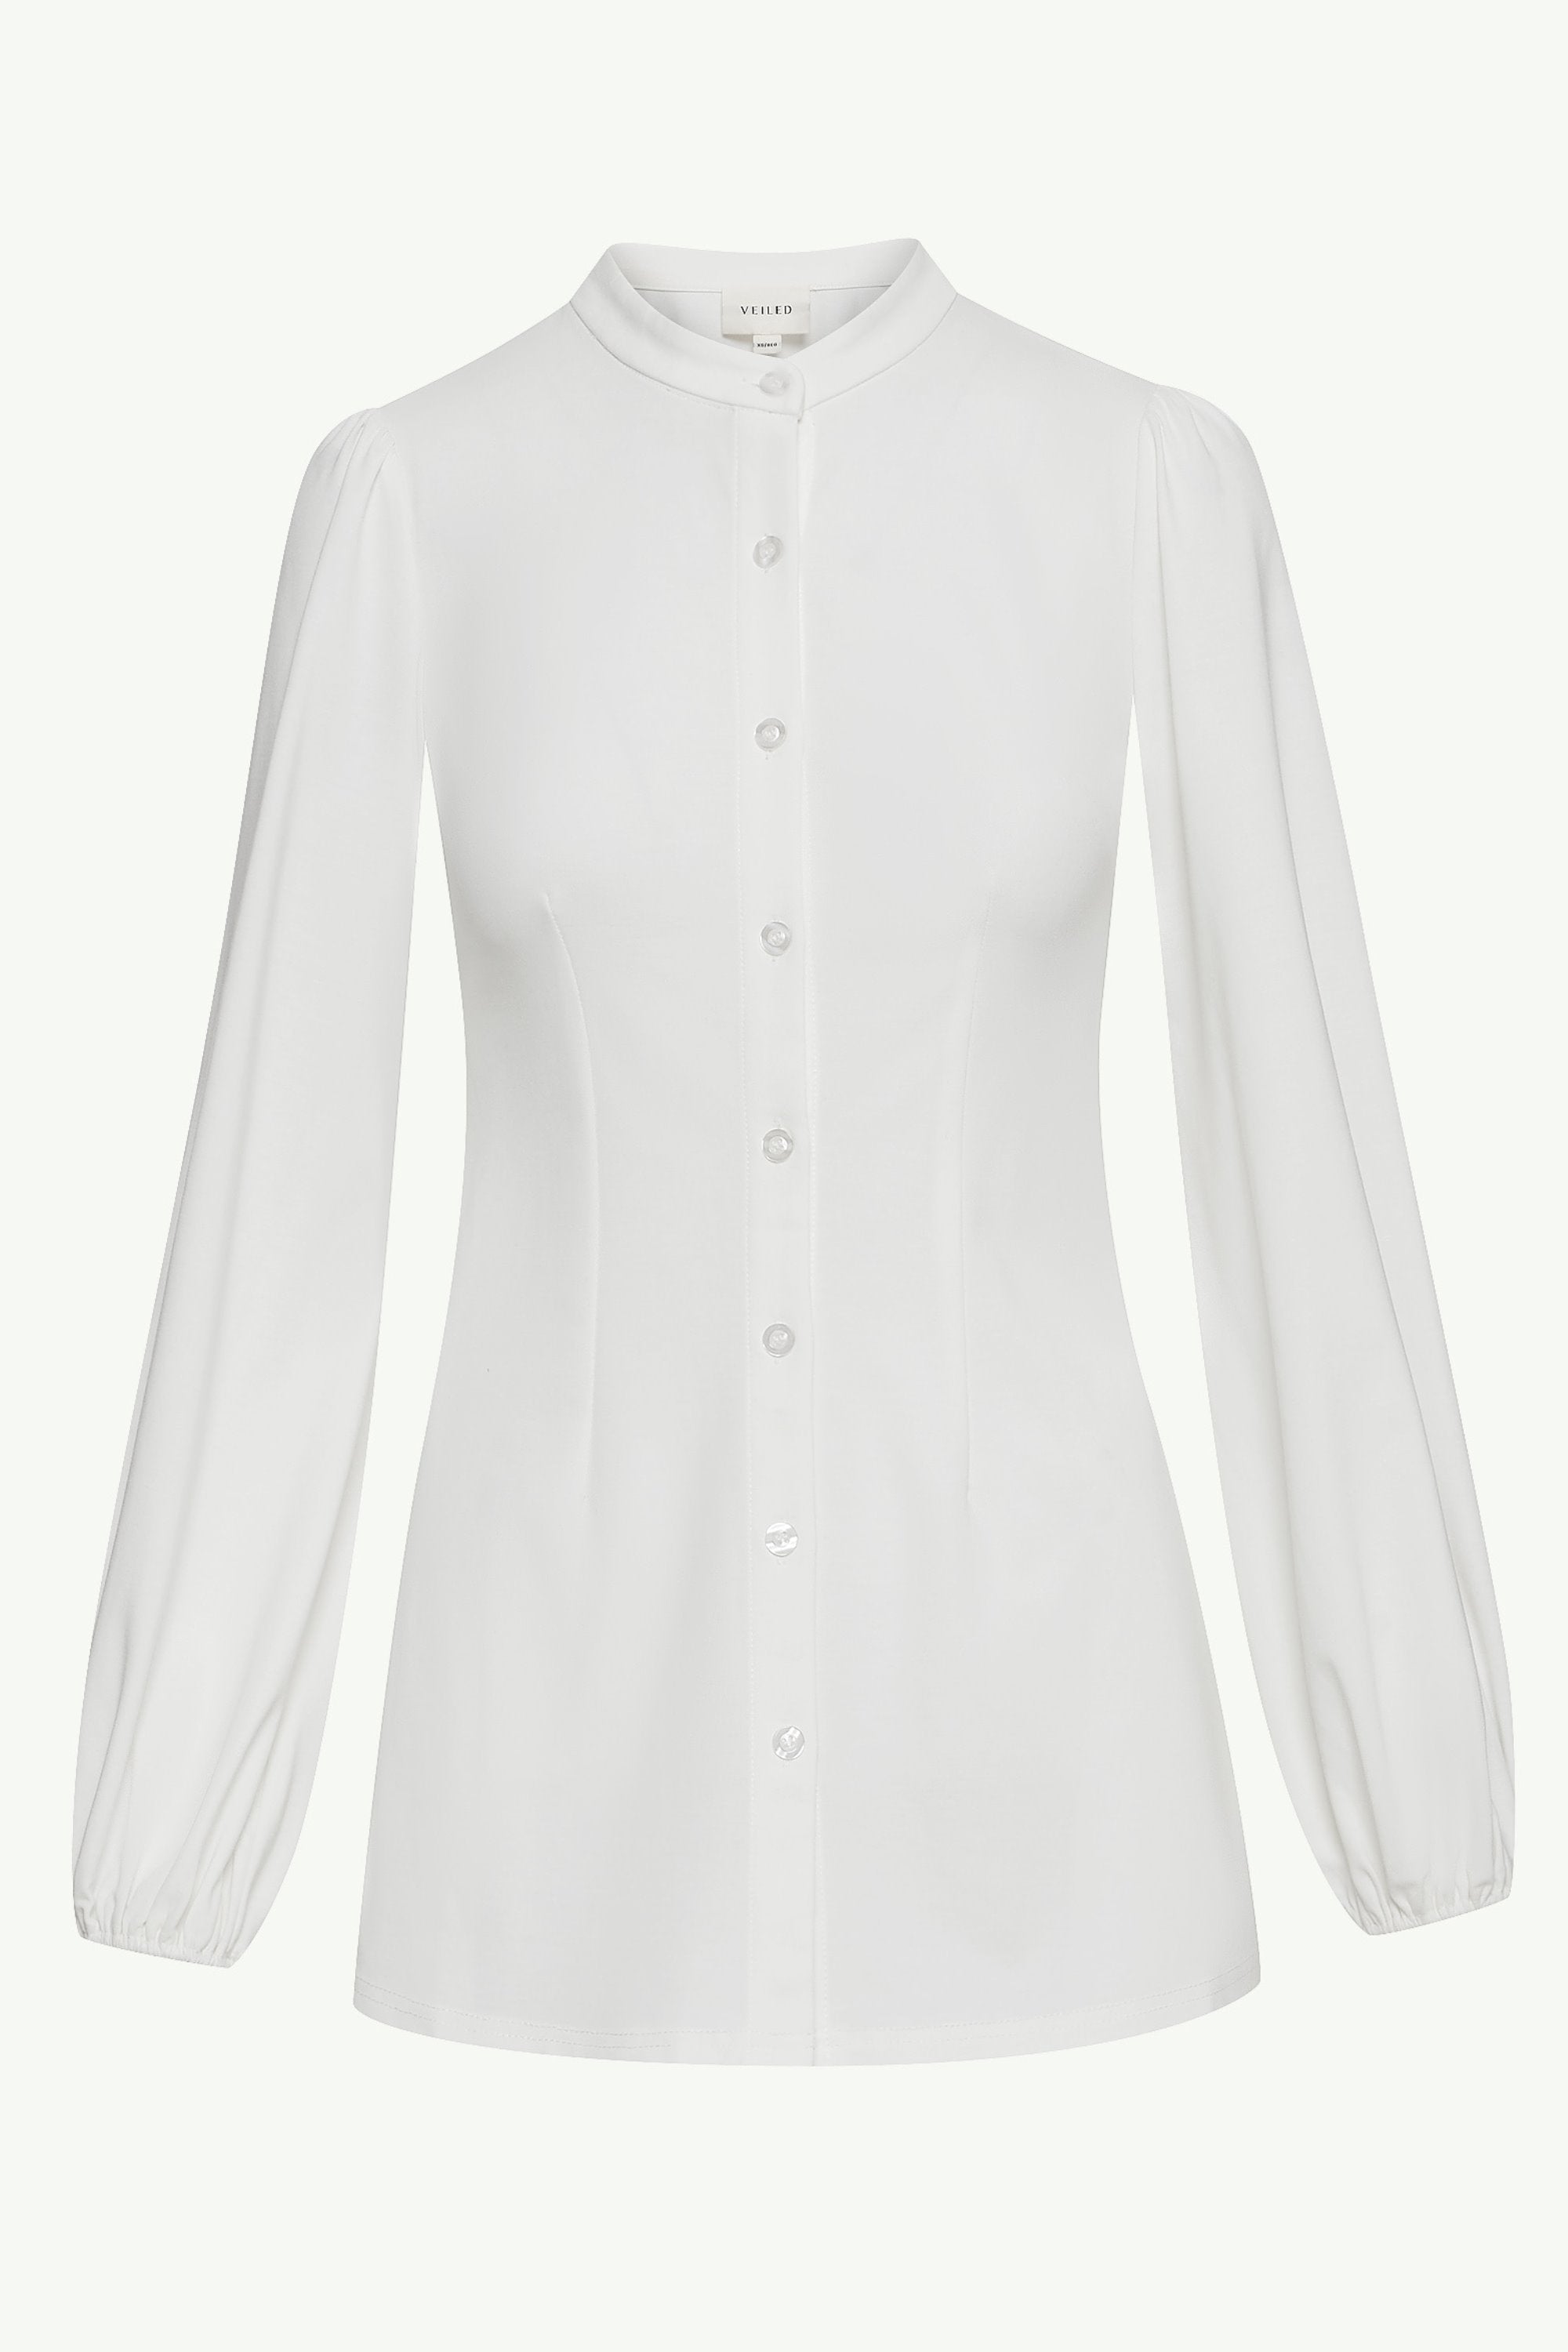 Rayana Jersey Button Down Top - White Clothing saigonodysseyhotel 